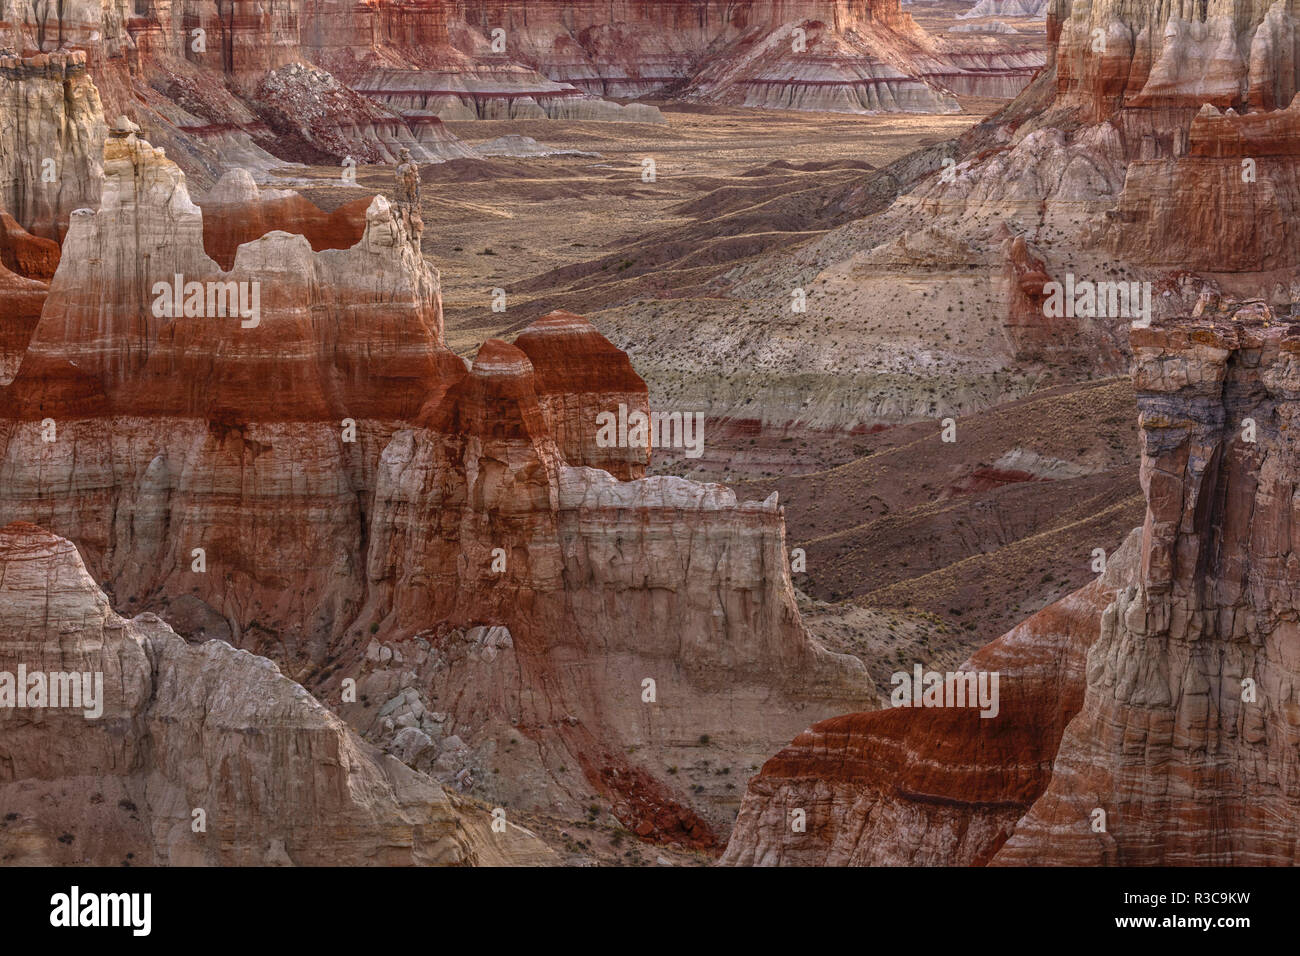 Unique colorful formations of Coal Mine Canyon, Arizona Stock Photo